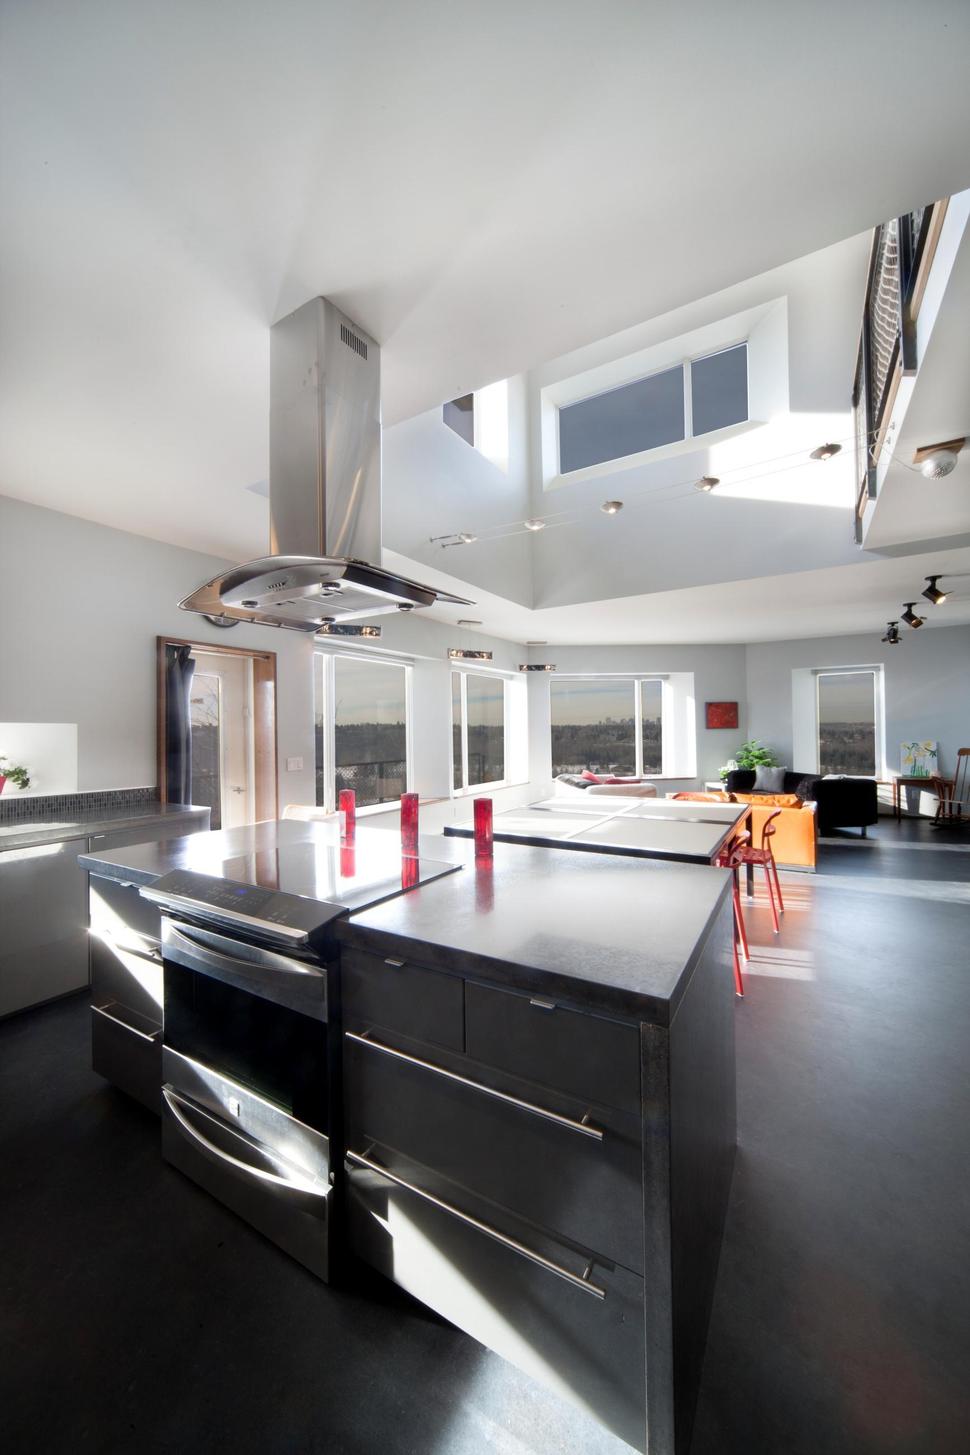 low-energy-home-working-towards-net-zero-rating-4-kitchen.jpg